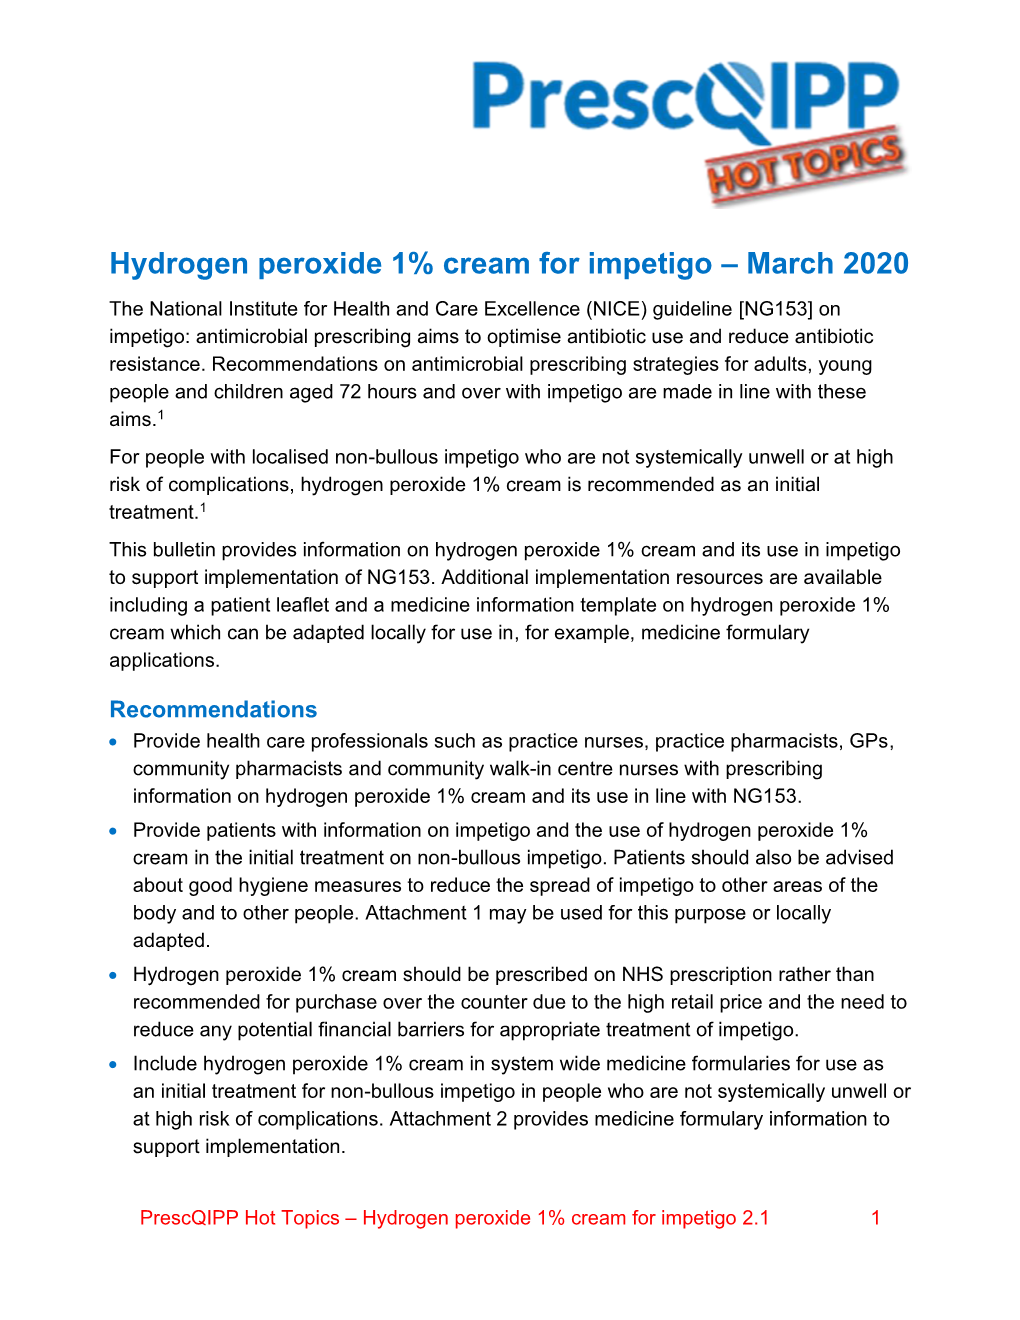 Hydrogen Peroxide 1% Cream for Impetigo Prescqipp Hot Topic